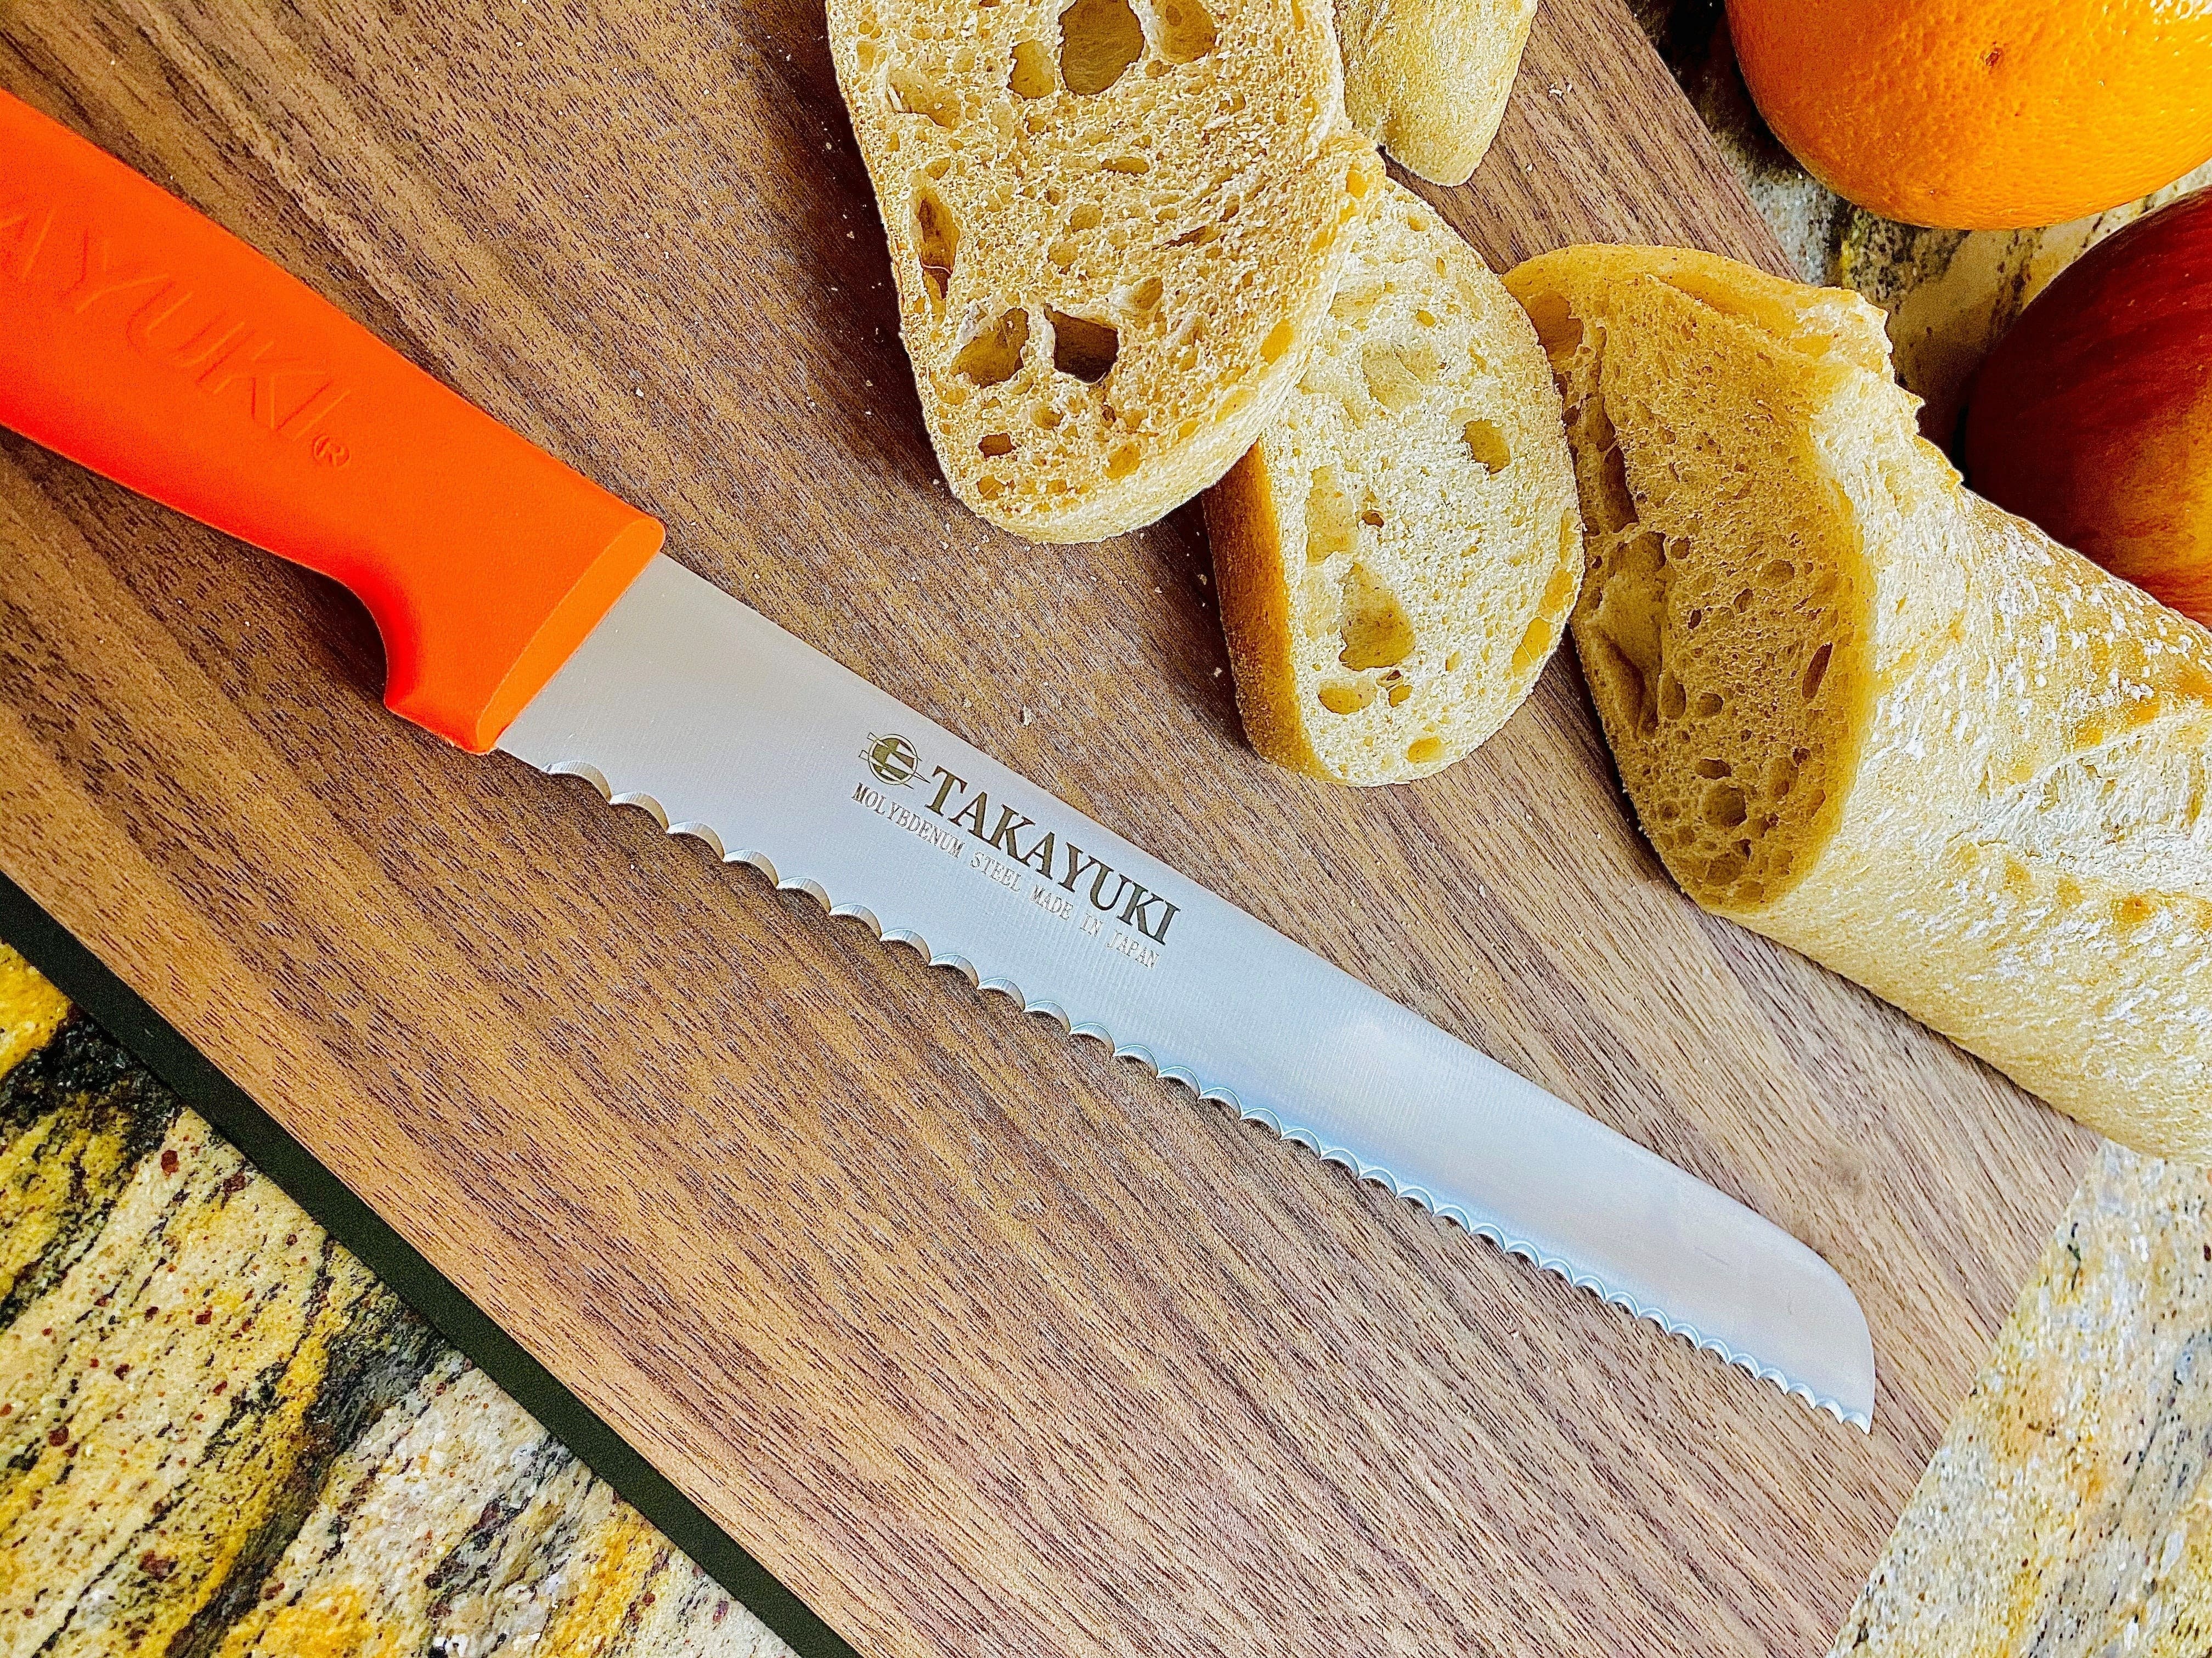 PAMPERED CHEF Paring Knife Orange Plastic Handle 18B NEW